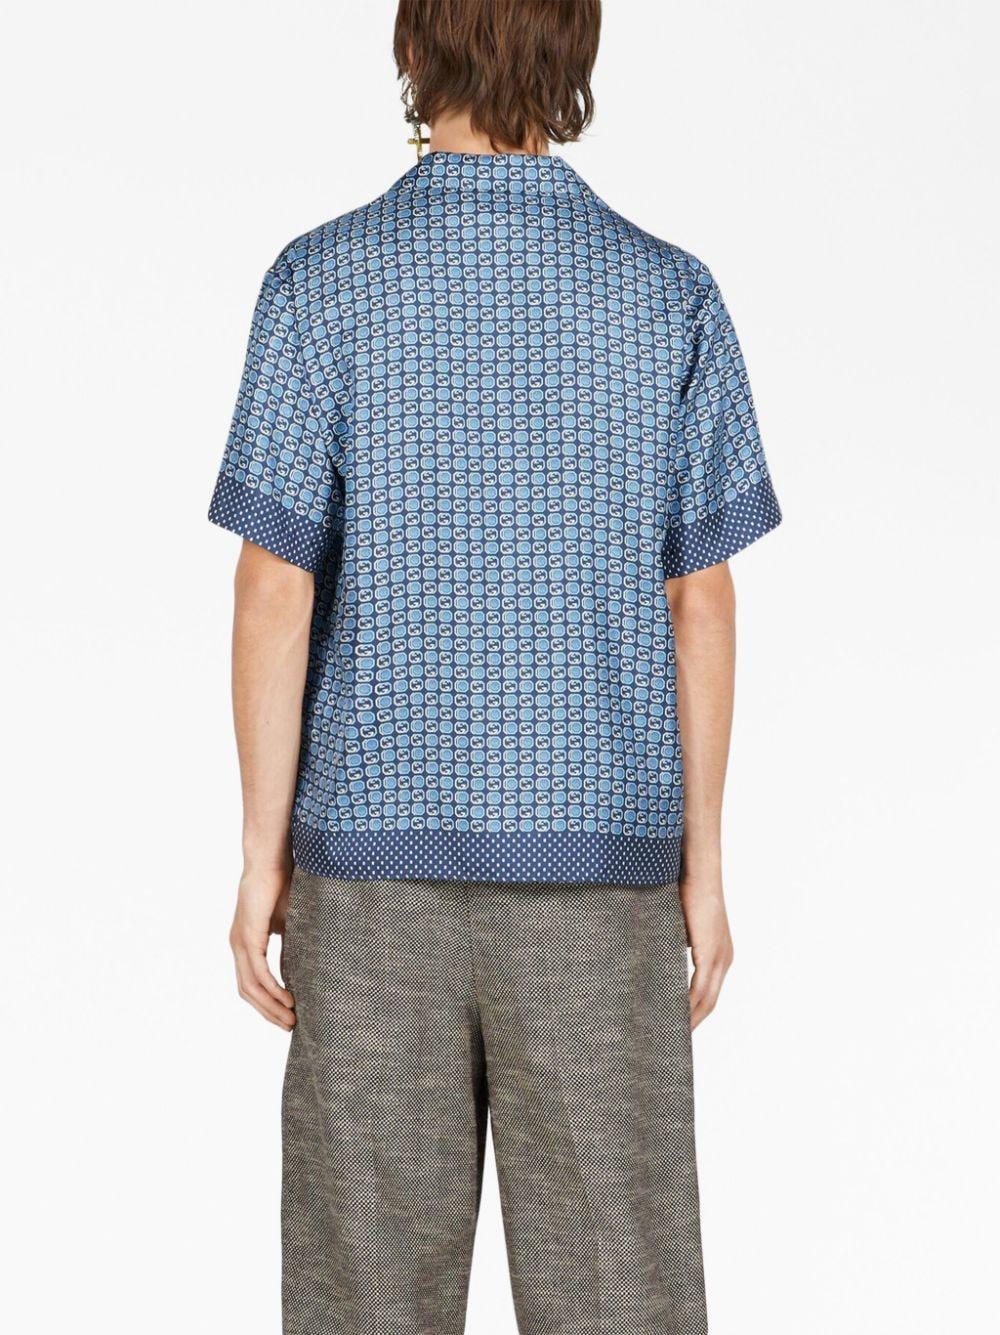 Gucci Navy Blue Printed Silk Twill Short Sleeve Shirt S Gucci